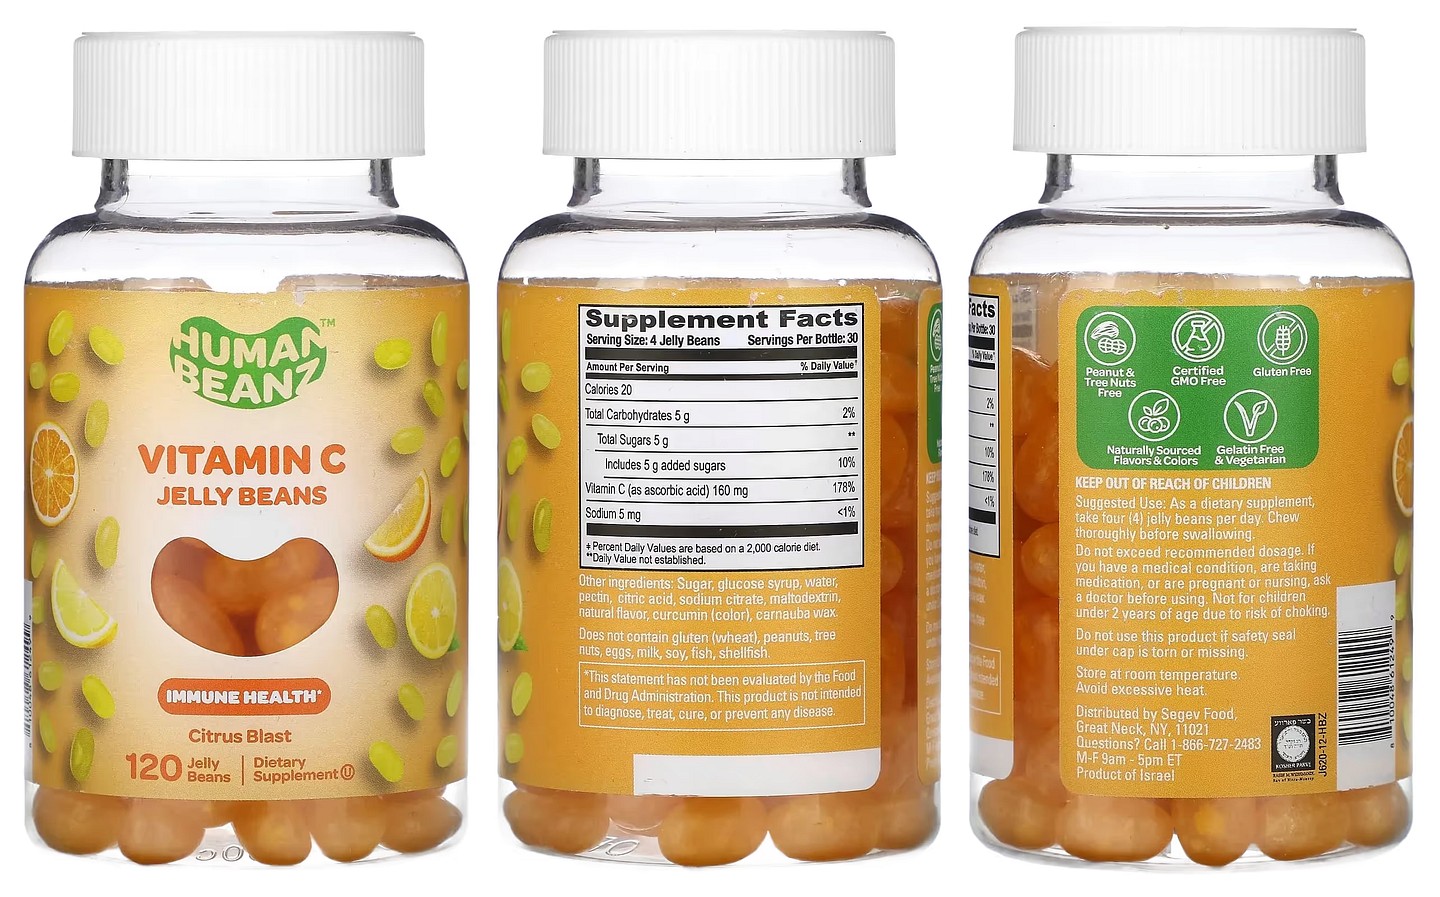 Human Beanz, Vitamin C Jelly Beans, Citrus Blast packaging